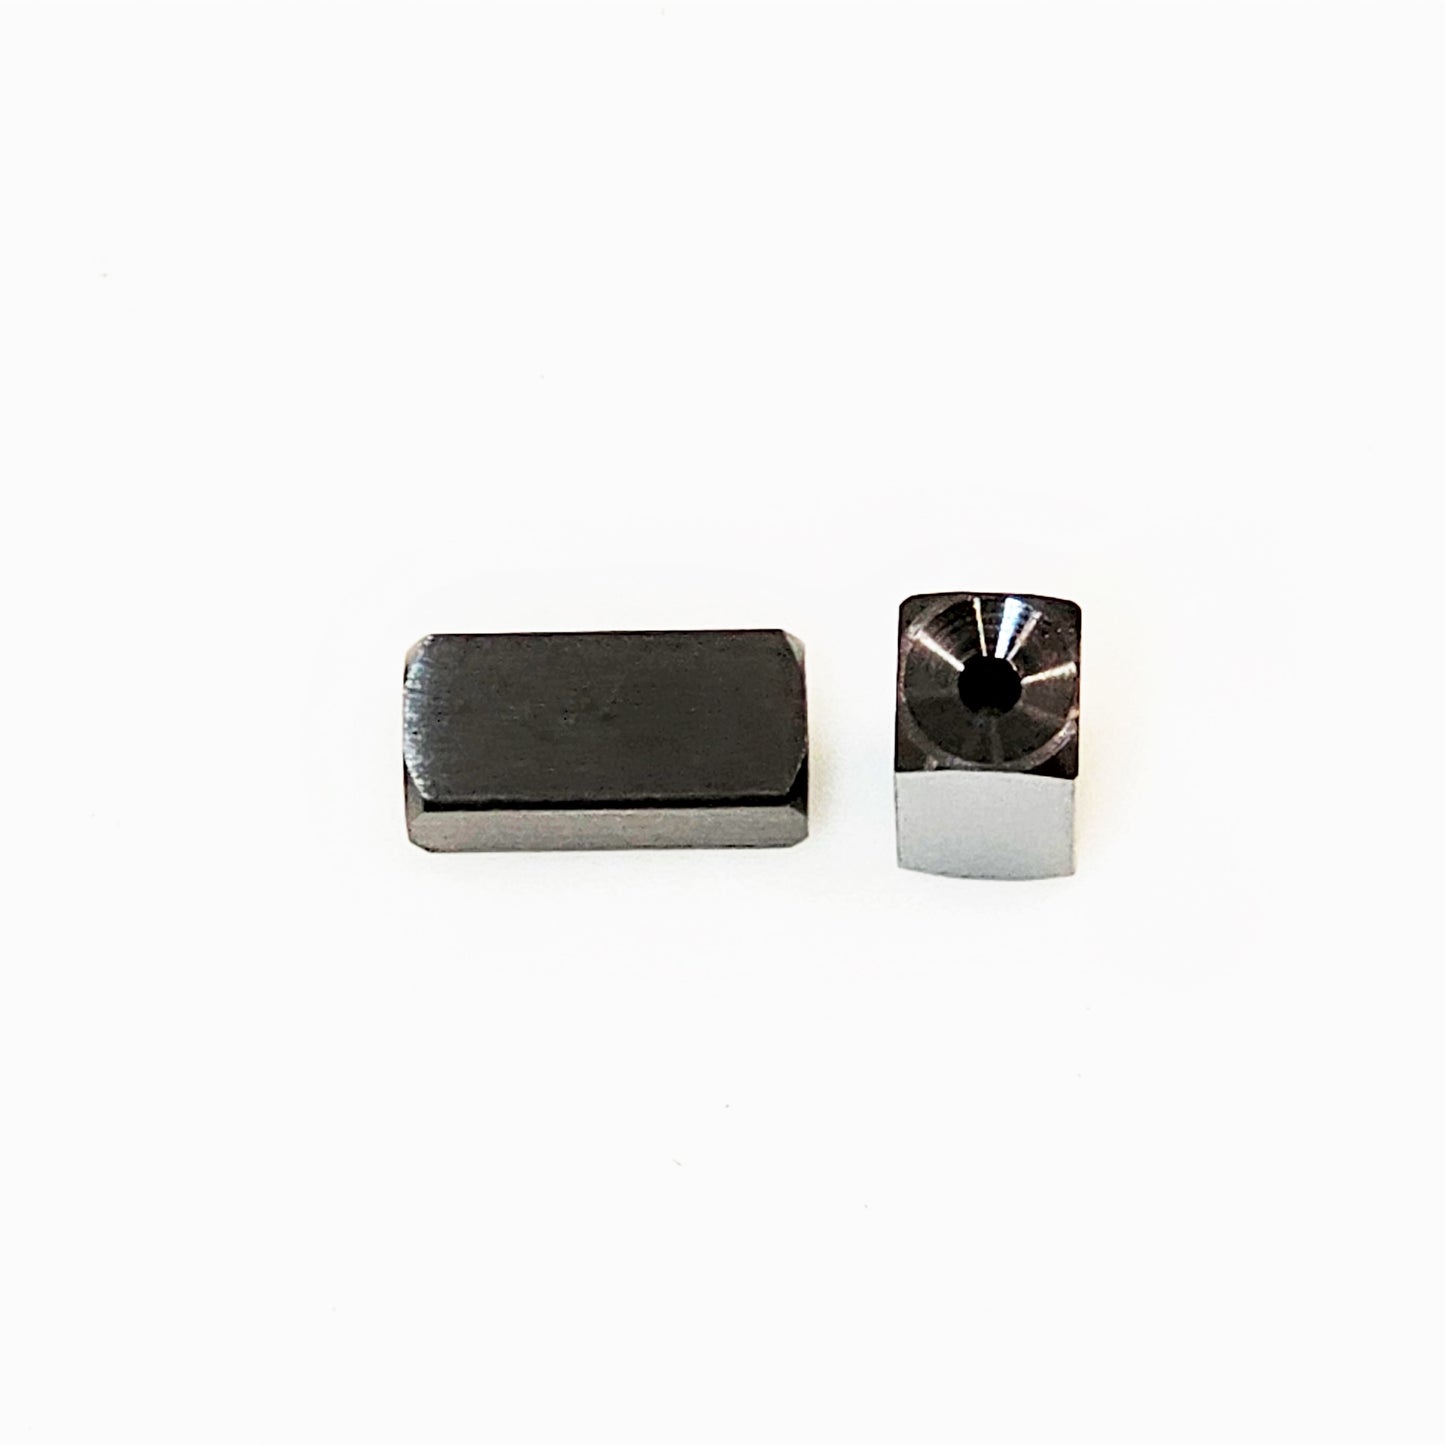 Black Plated Square Bar - 6mm x 13mm